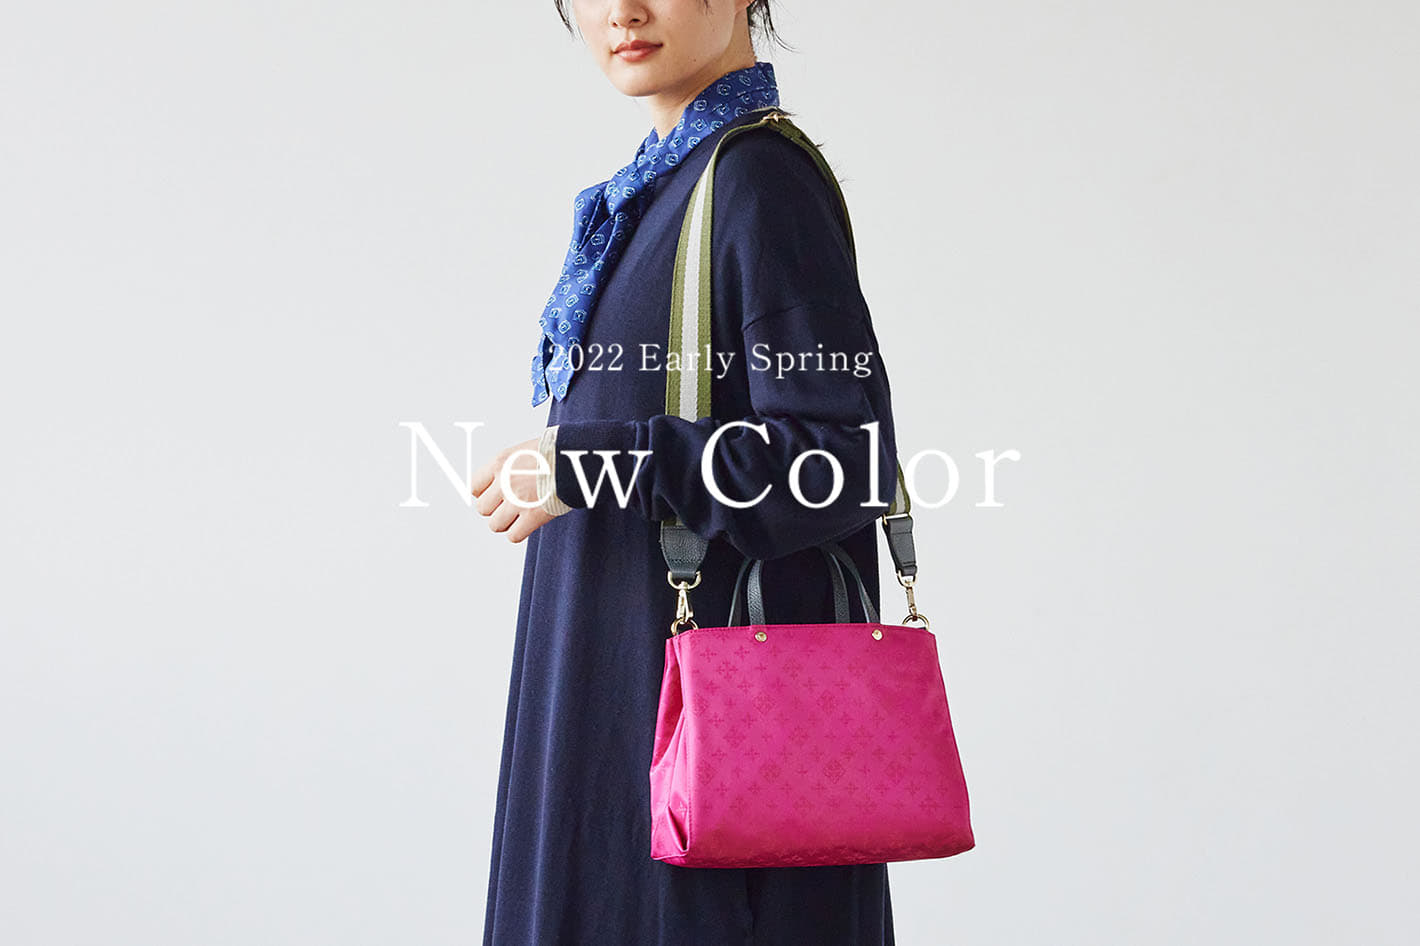 russet ◆New Color◆バッグから始める春カラー